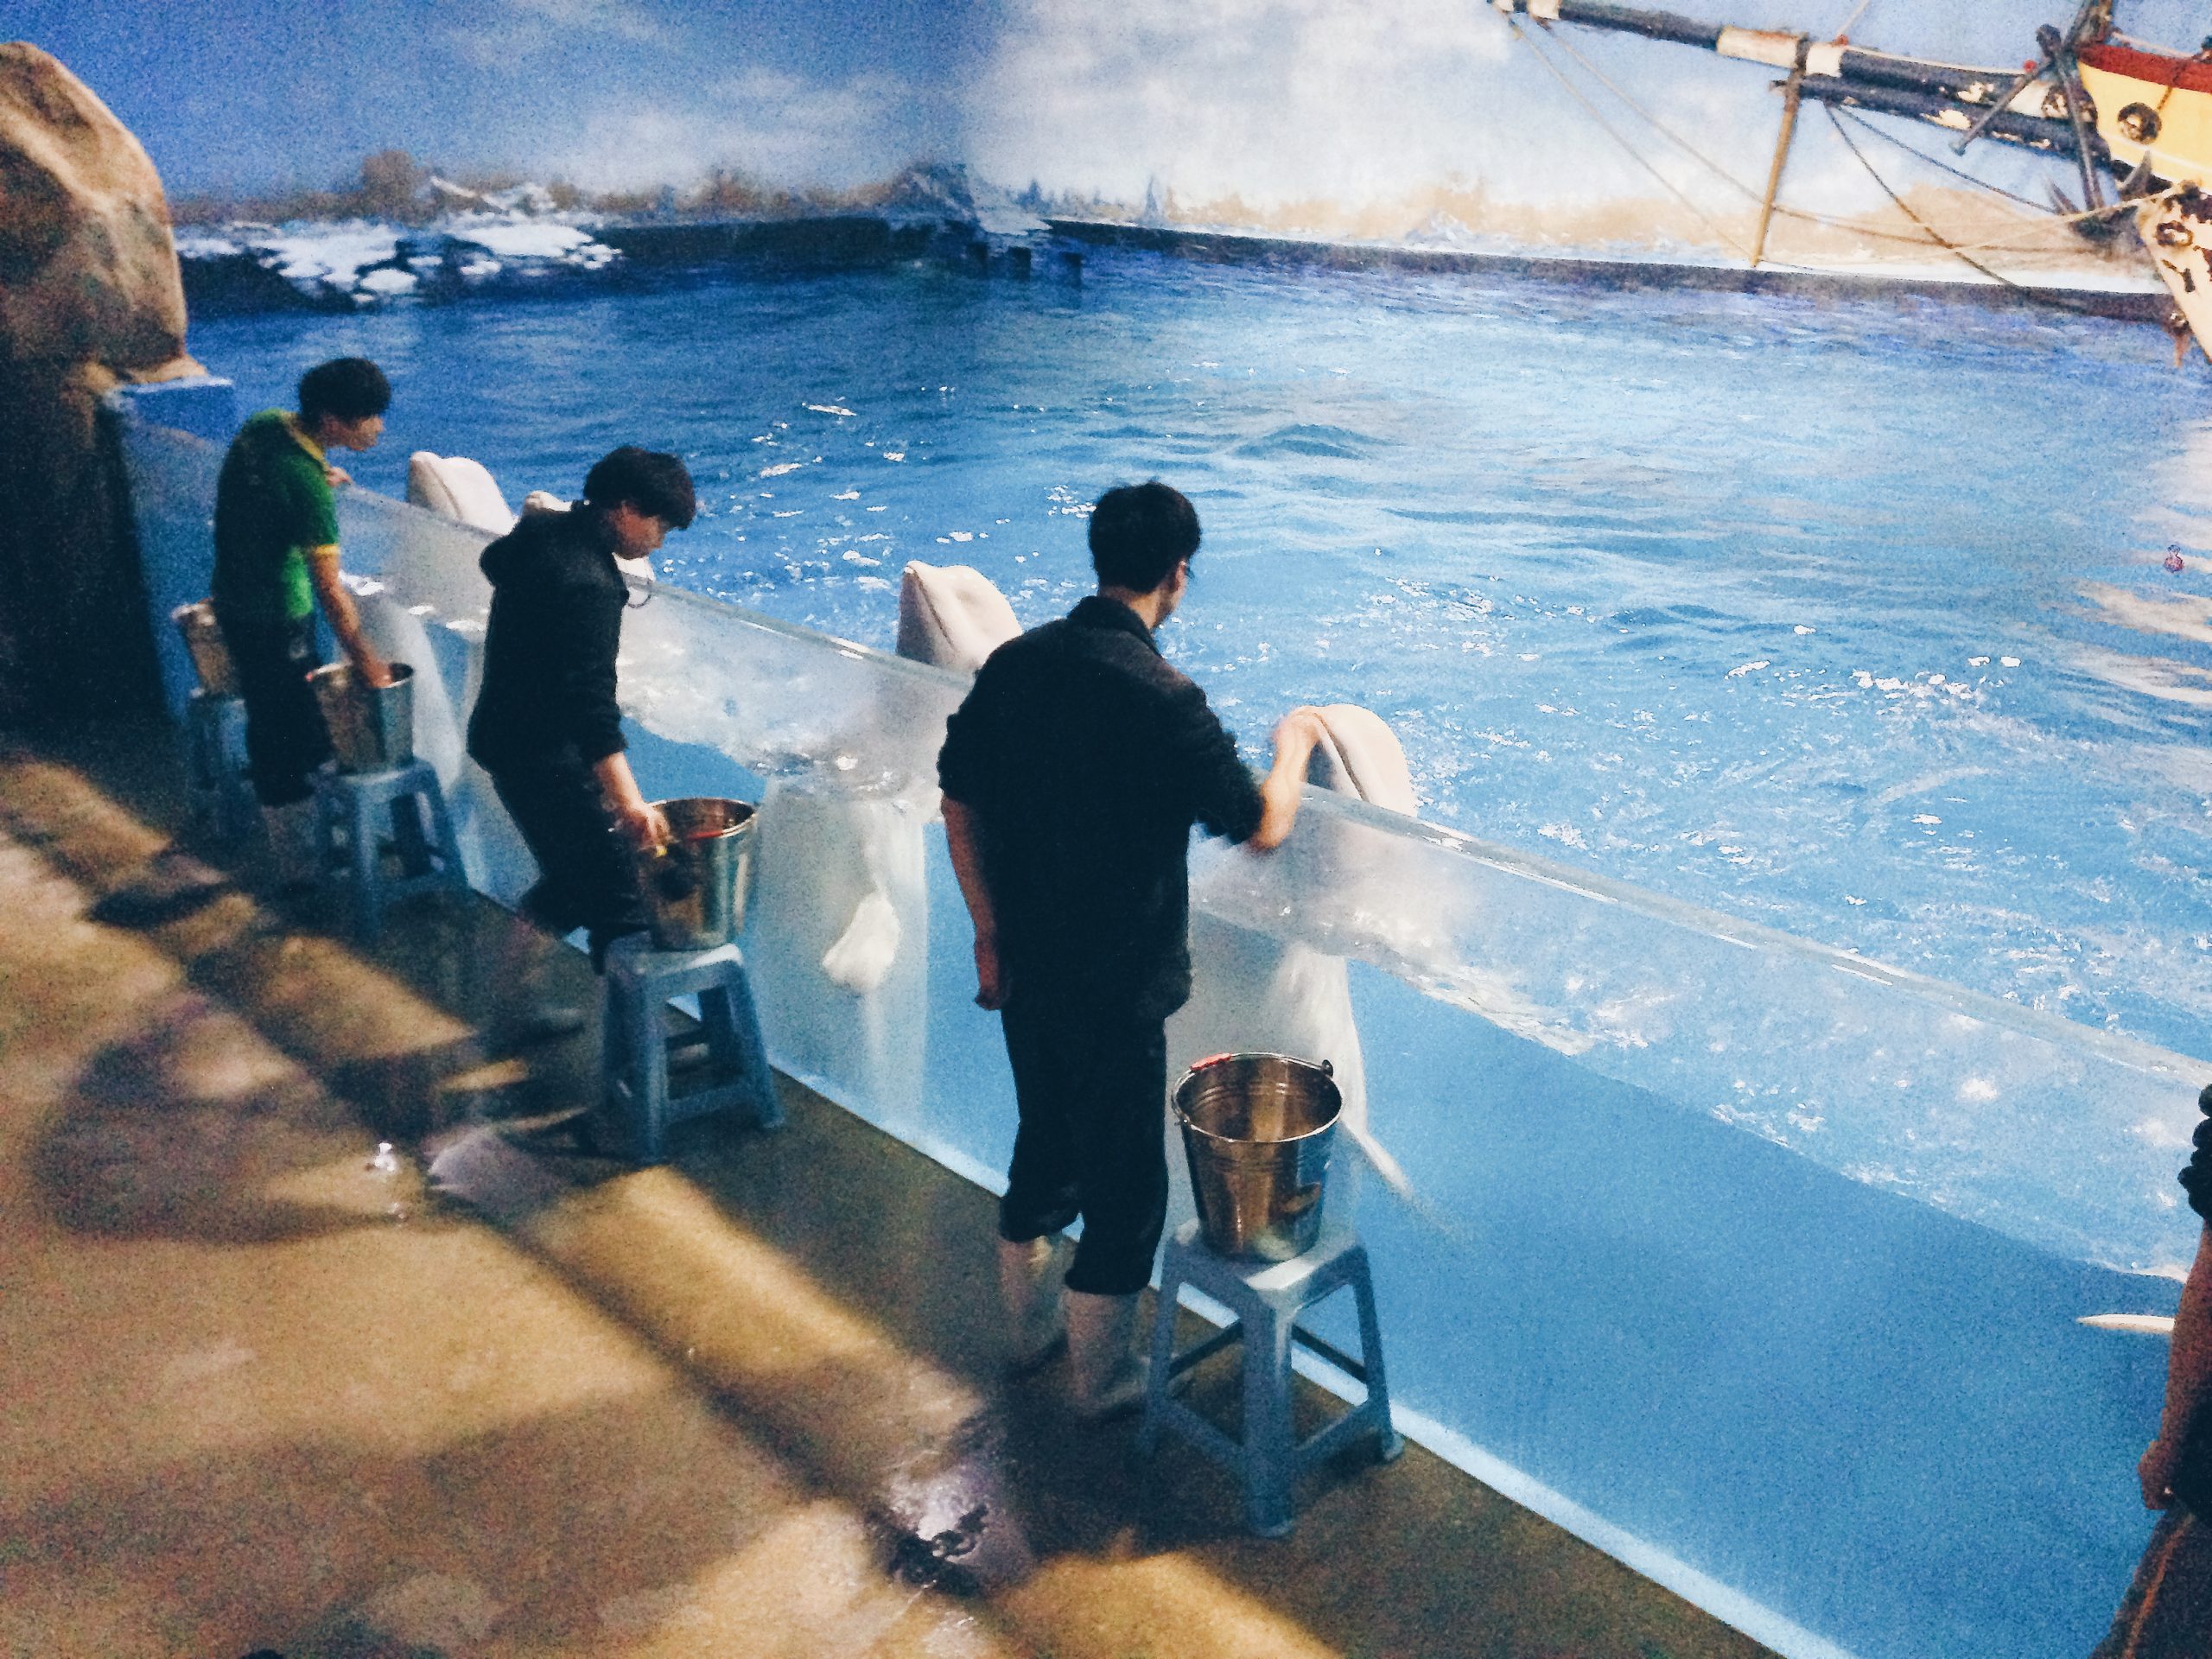 Feeding session at Tianjin Haichang Polar Ocean World